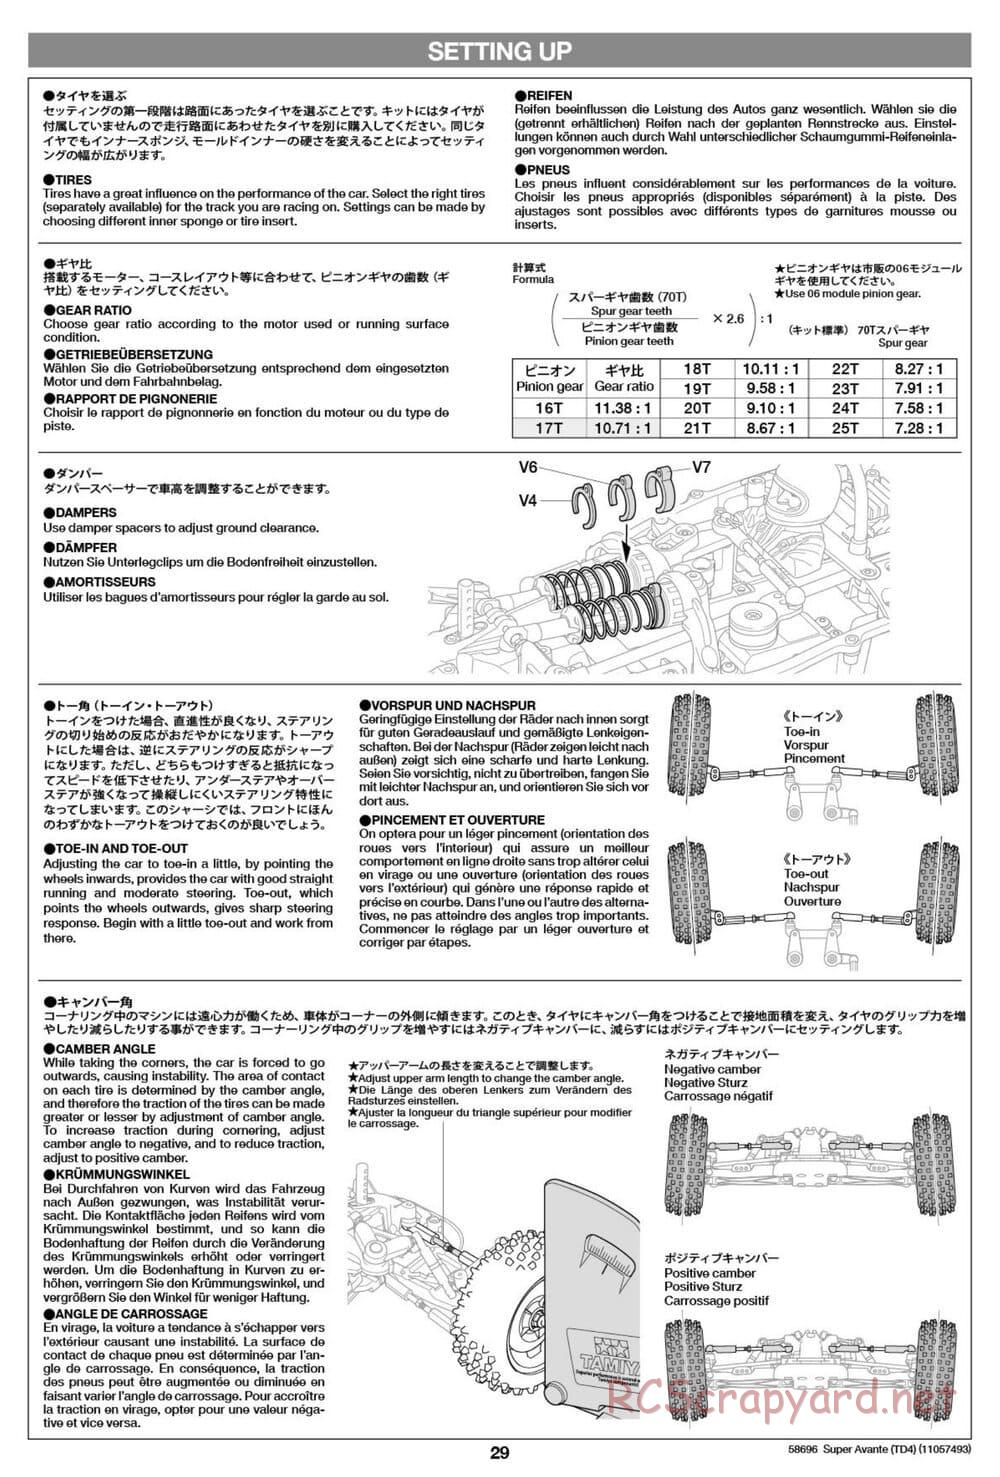 Tamiya - Super Avante - TD4 Chassis - Manual - Page 30